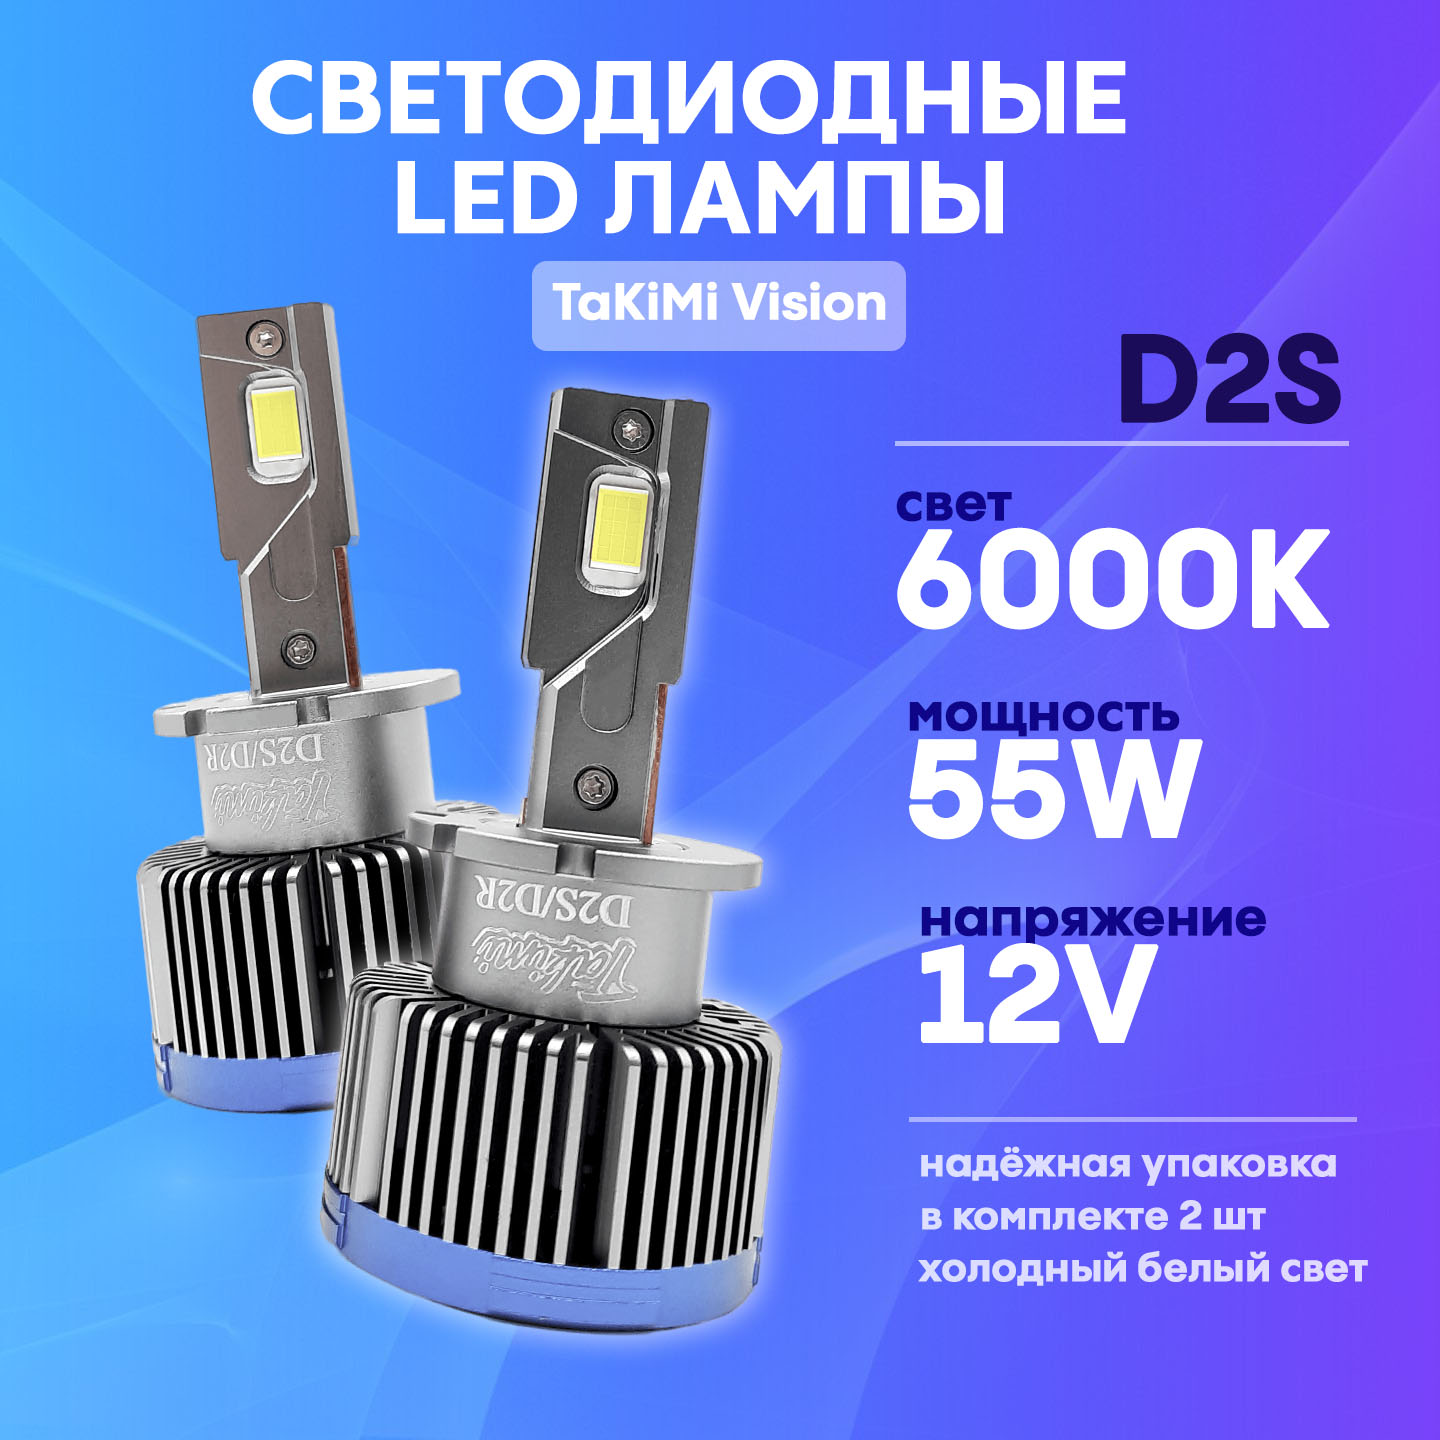 Светодиодные LED лампы Takimi Vision D2S 6000К 12V